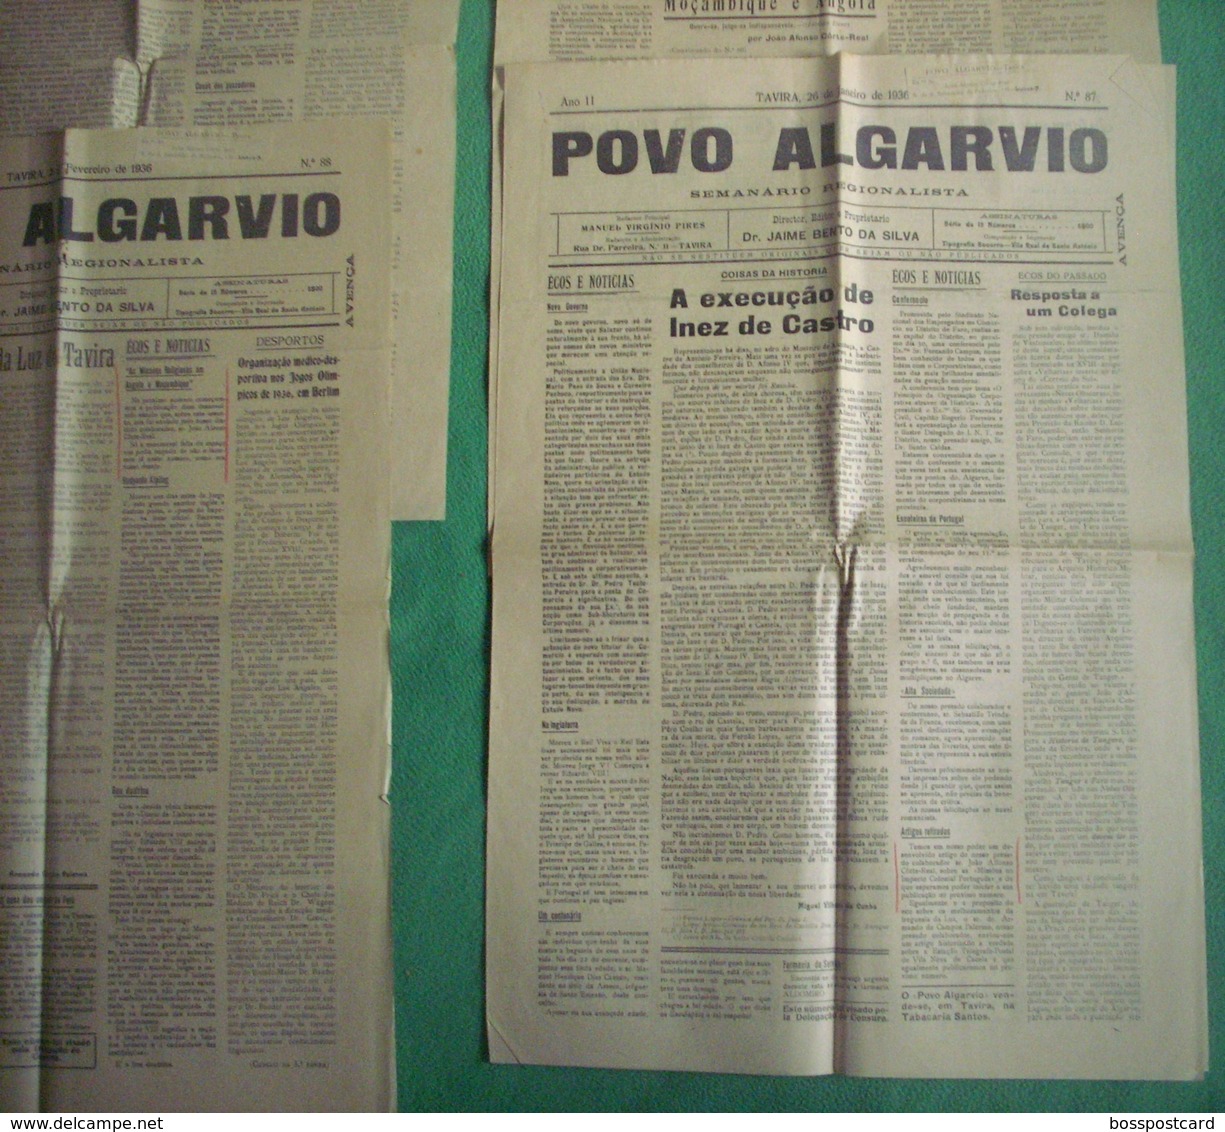 Tavira - 4 Jornais "Povo Algarvio" Nº 87, 88, 89, 92 De 1936 - Imprensa. Faro. - General Issues